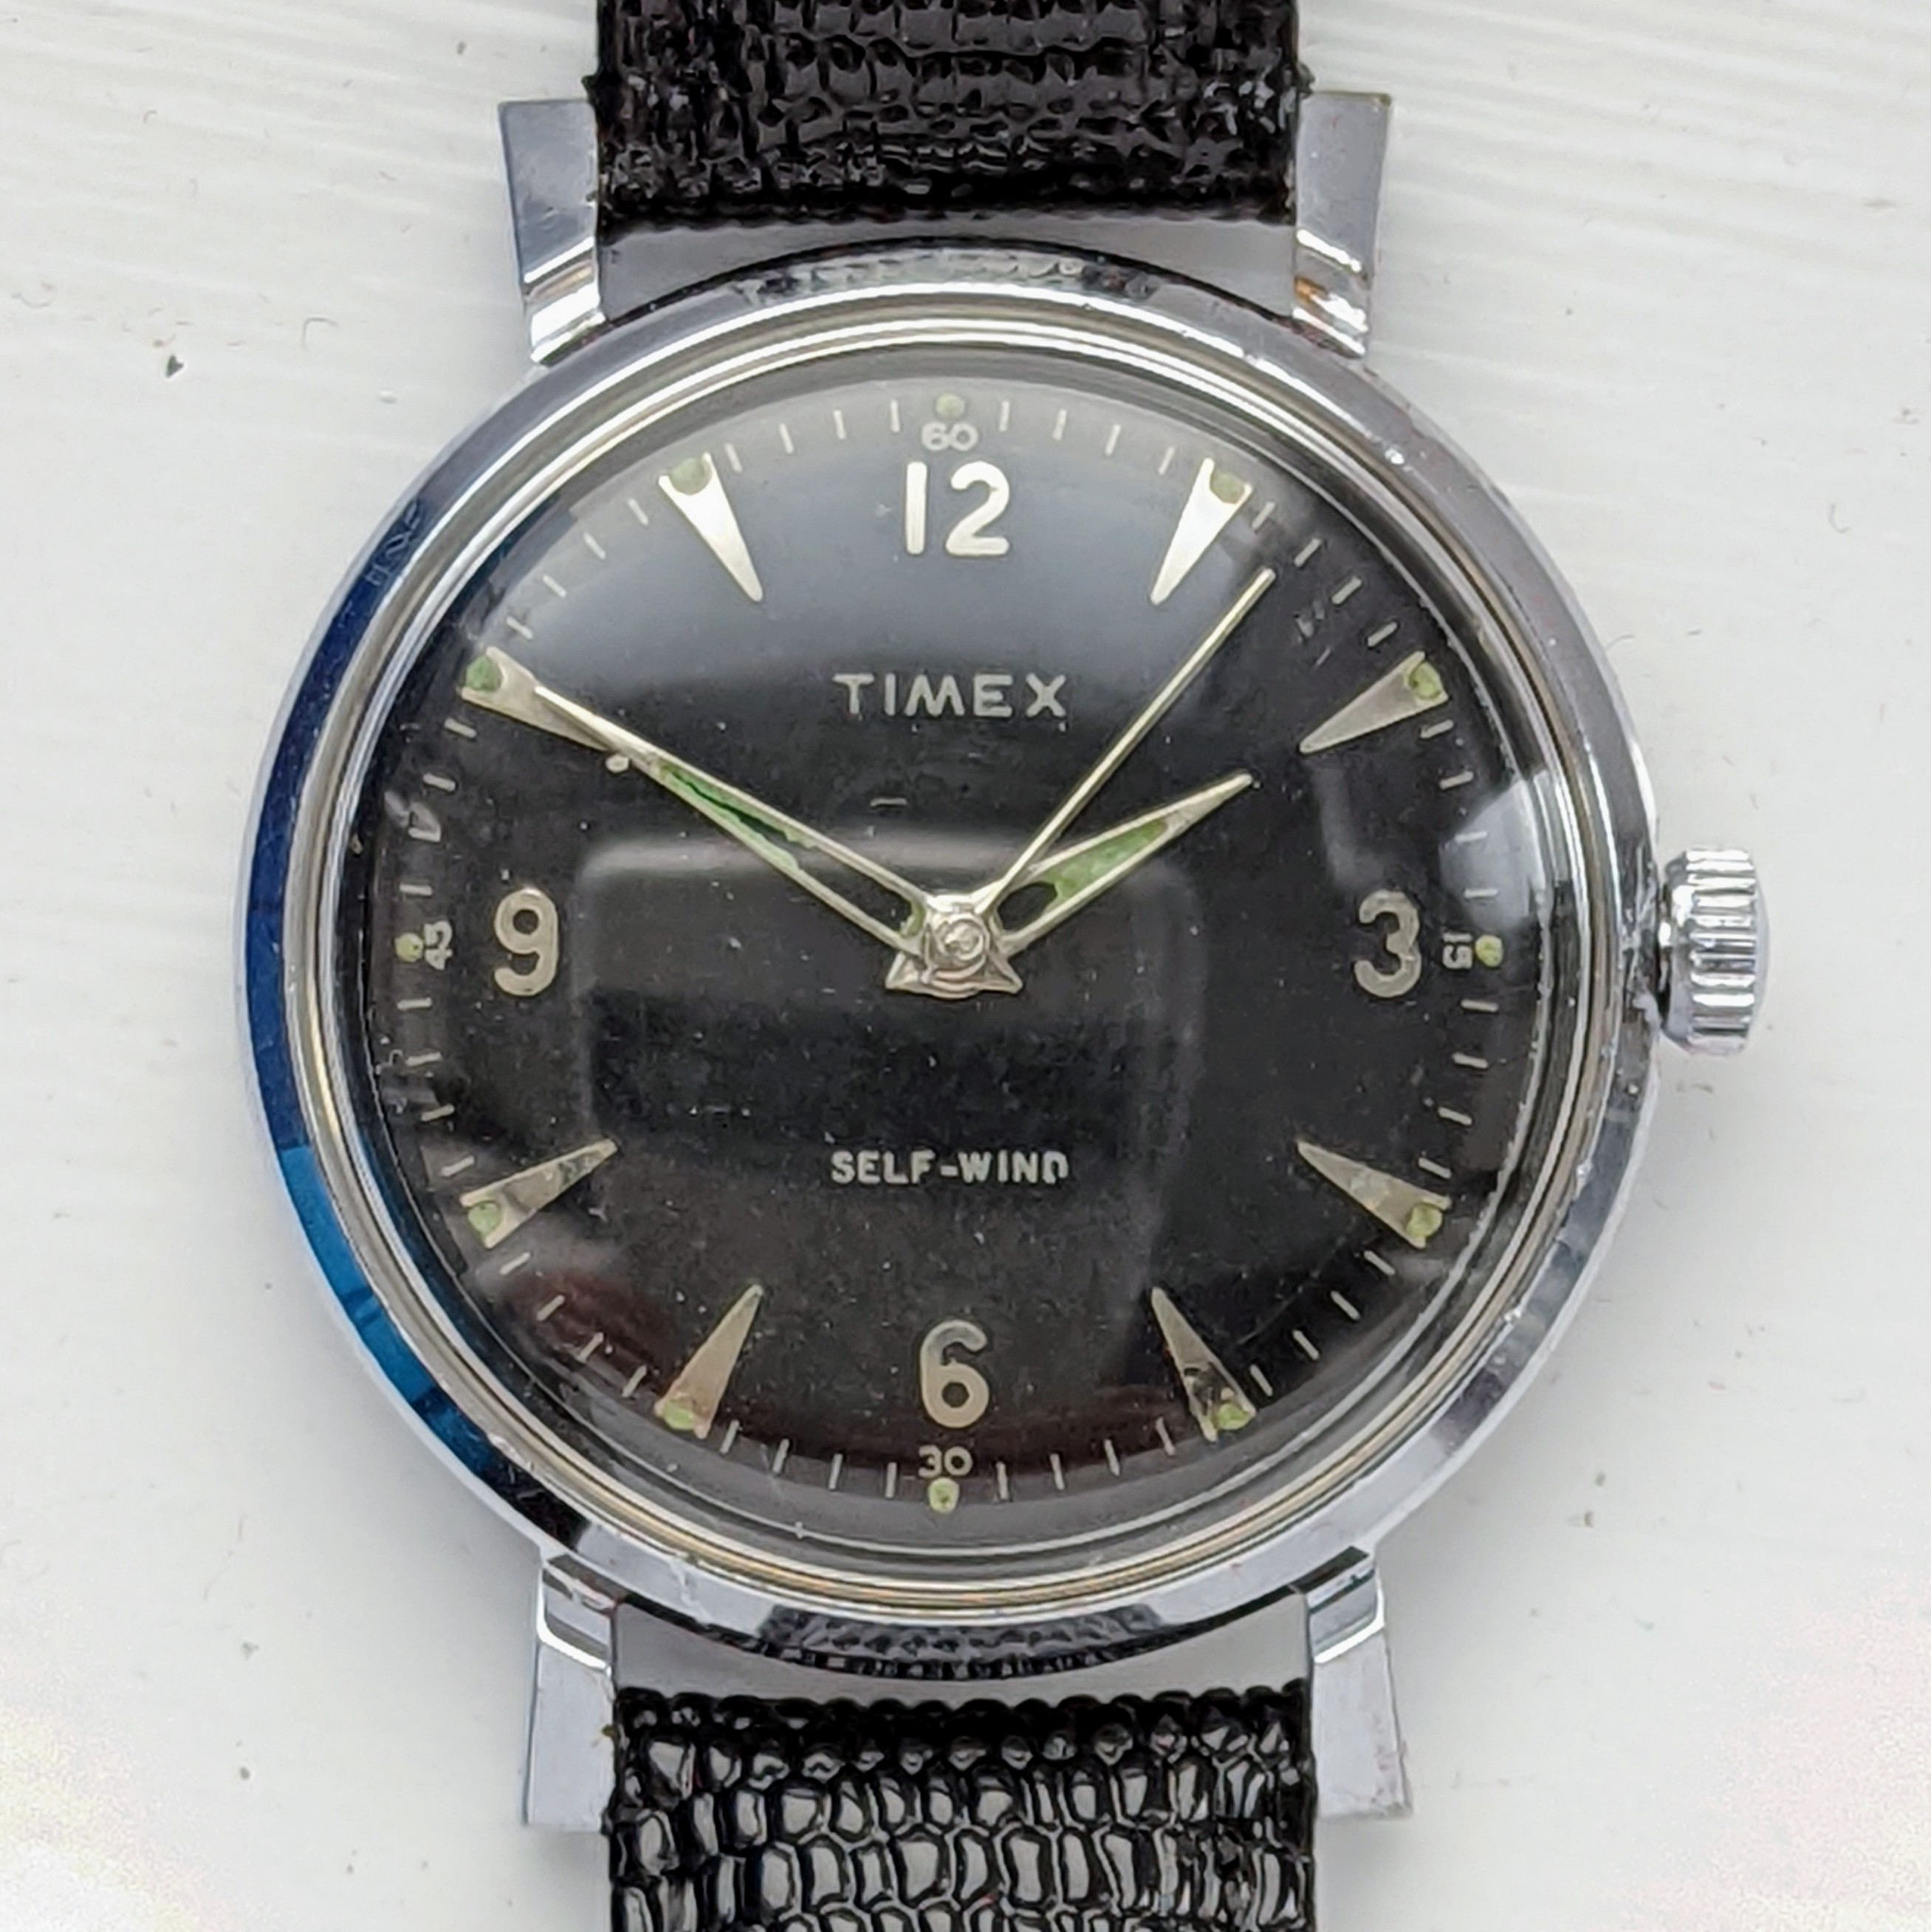 Timex Viscount 4014 2959 [1959]